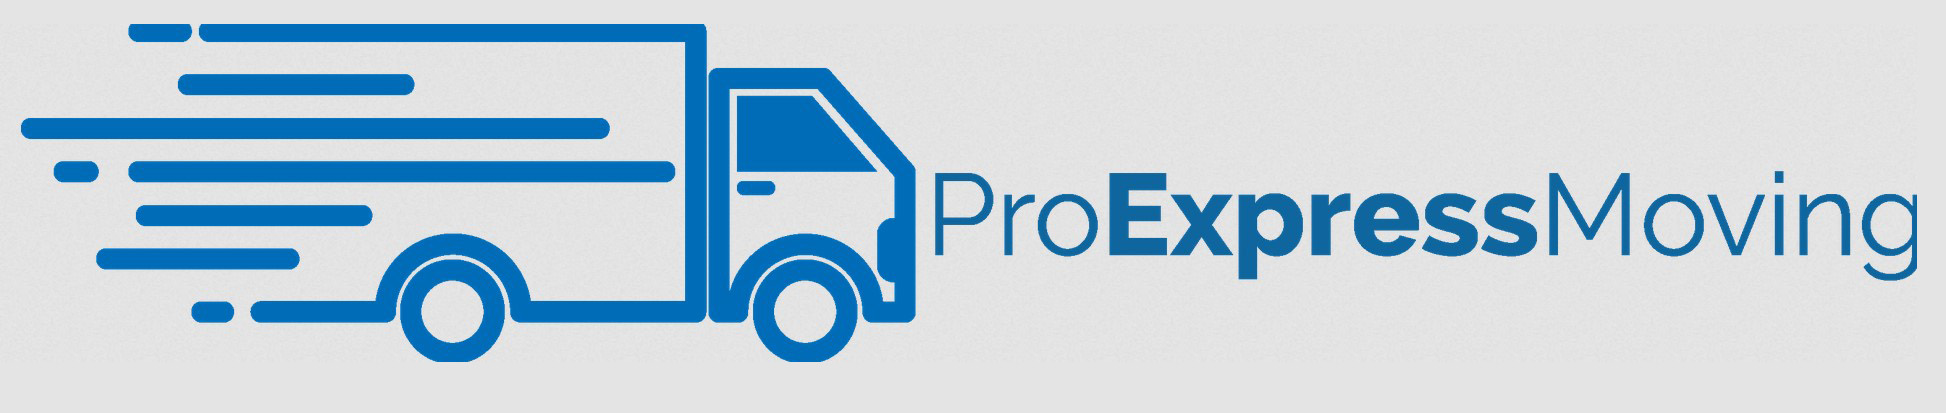 PRO EXPRESS MOVING company logo